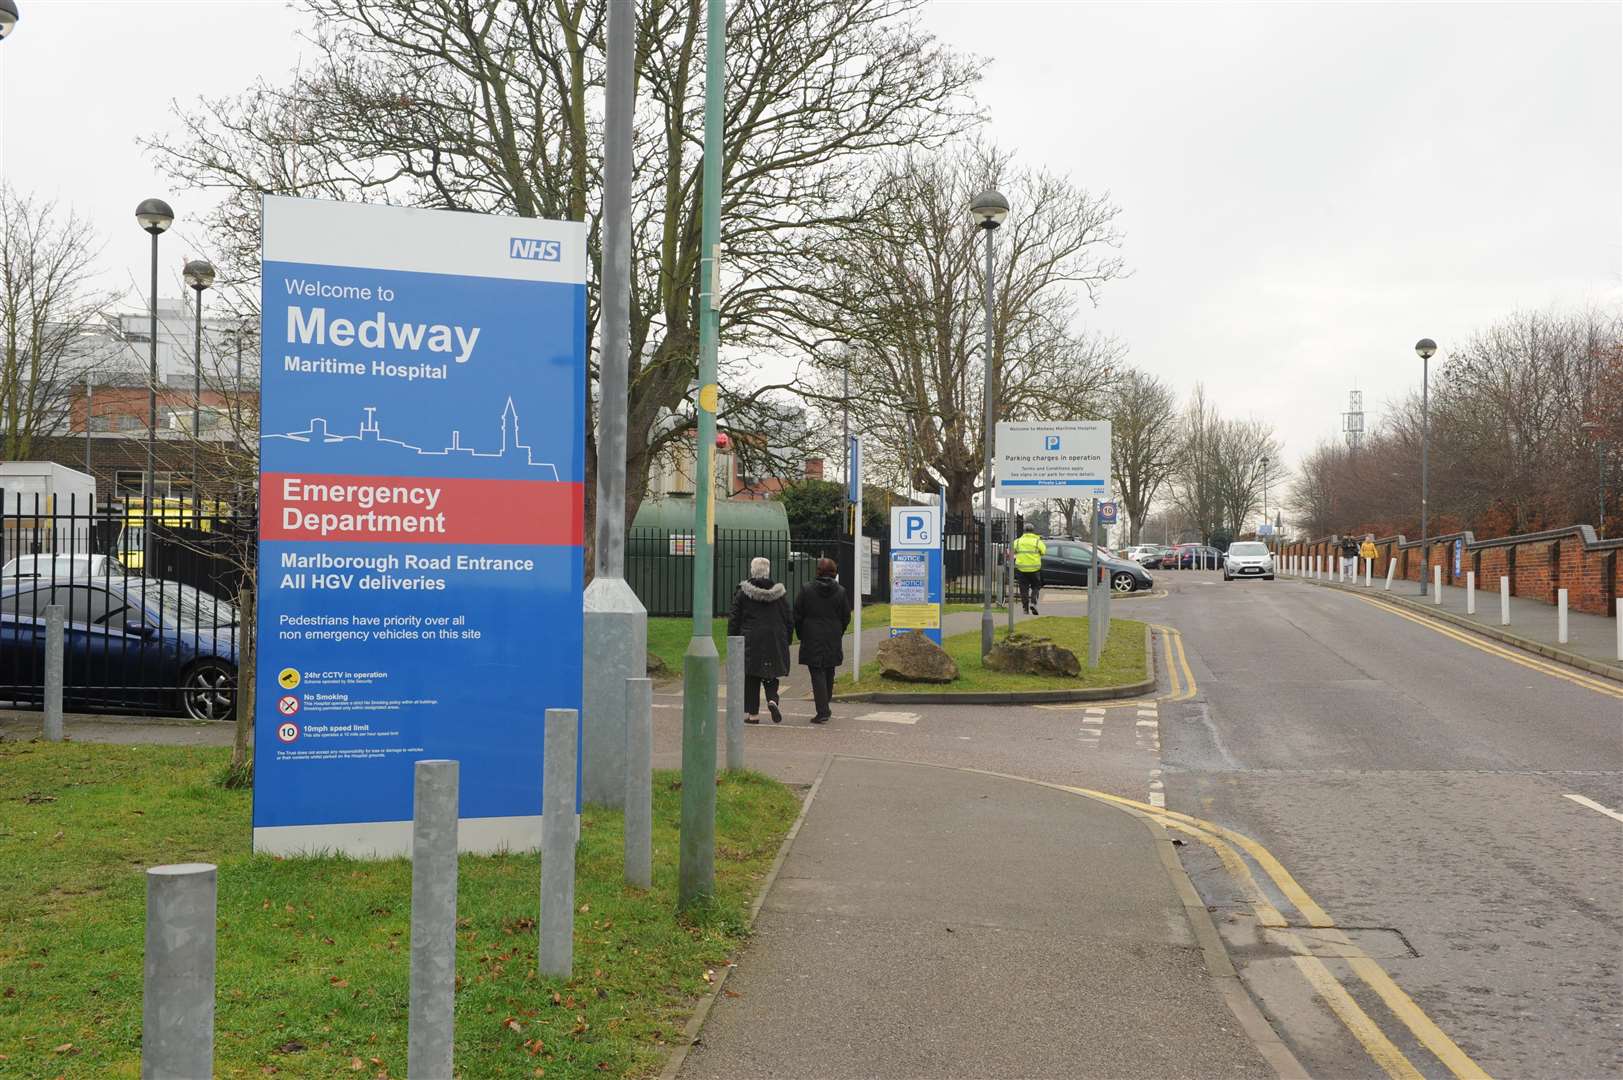 Medway Maritime Hospital Picture: Steve Crispe FM5046544. (4764648)